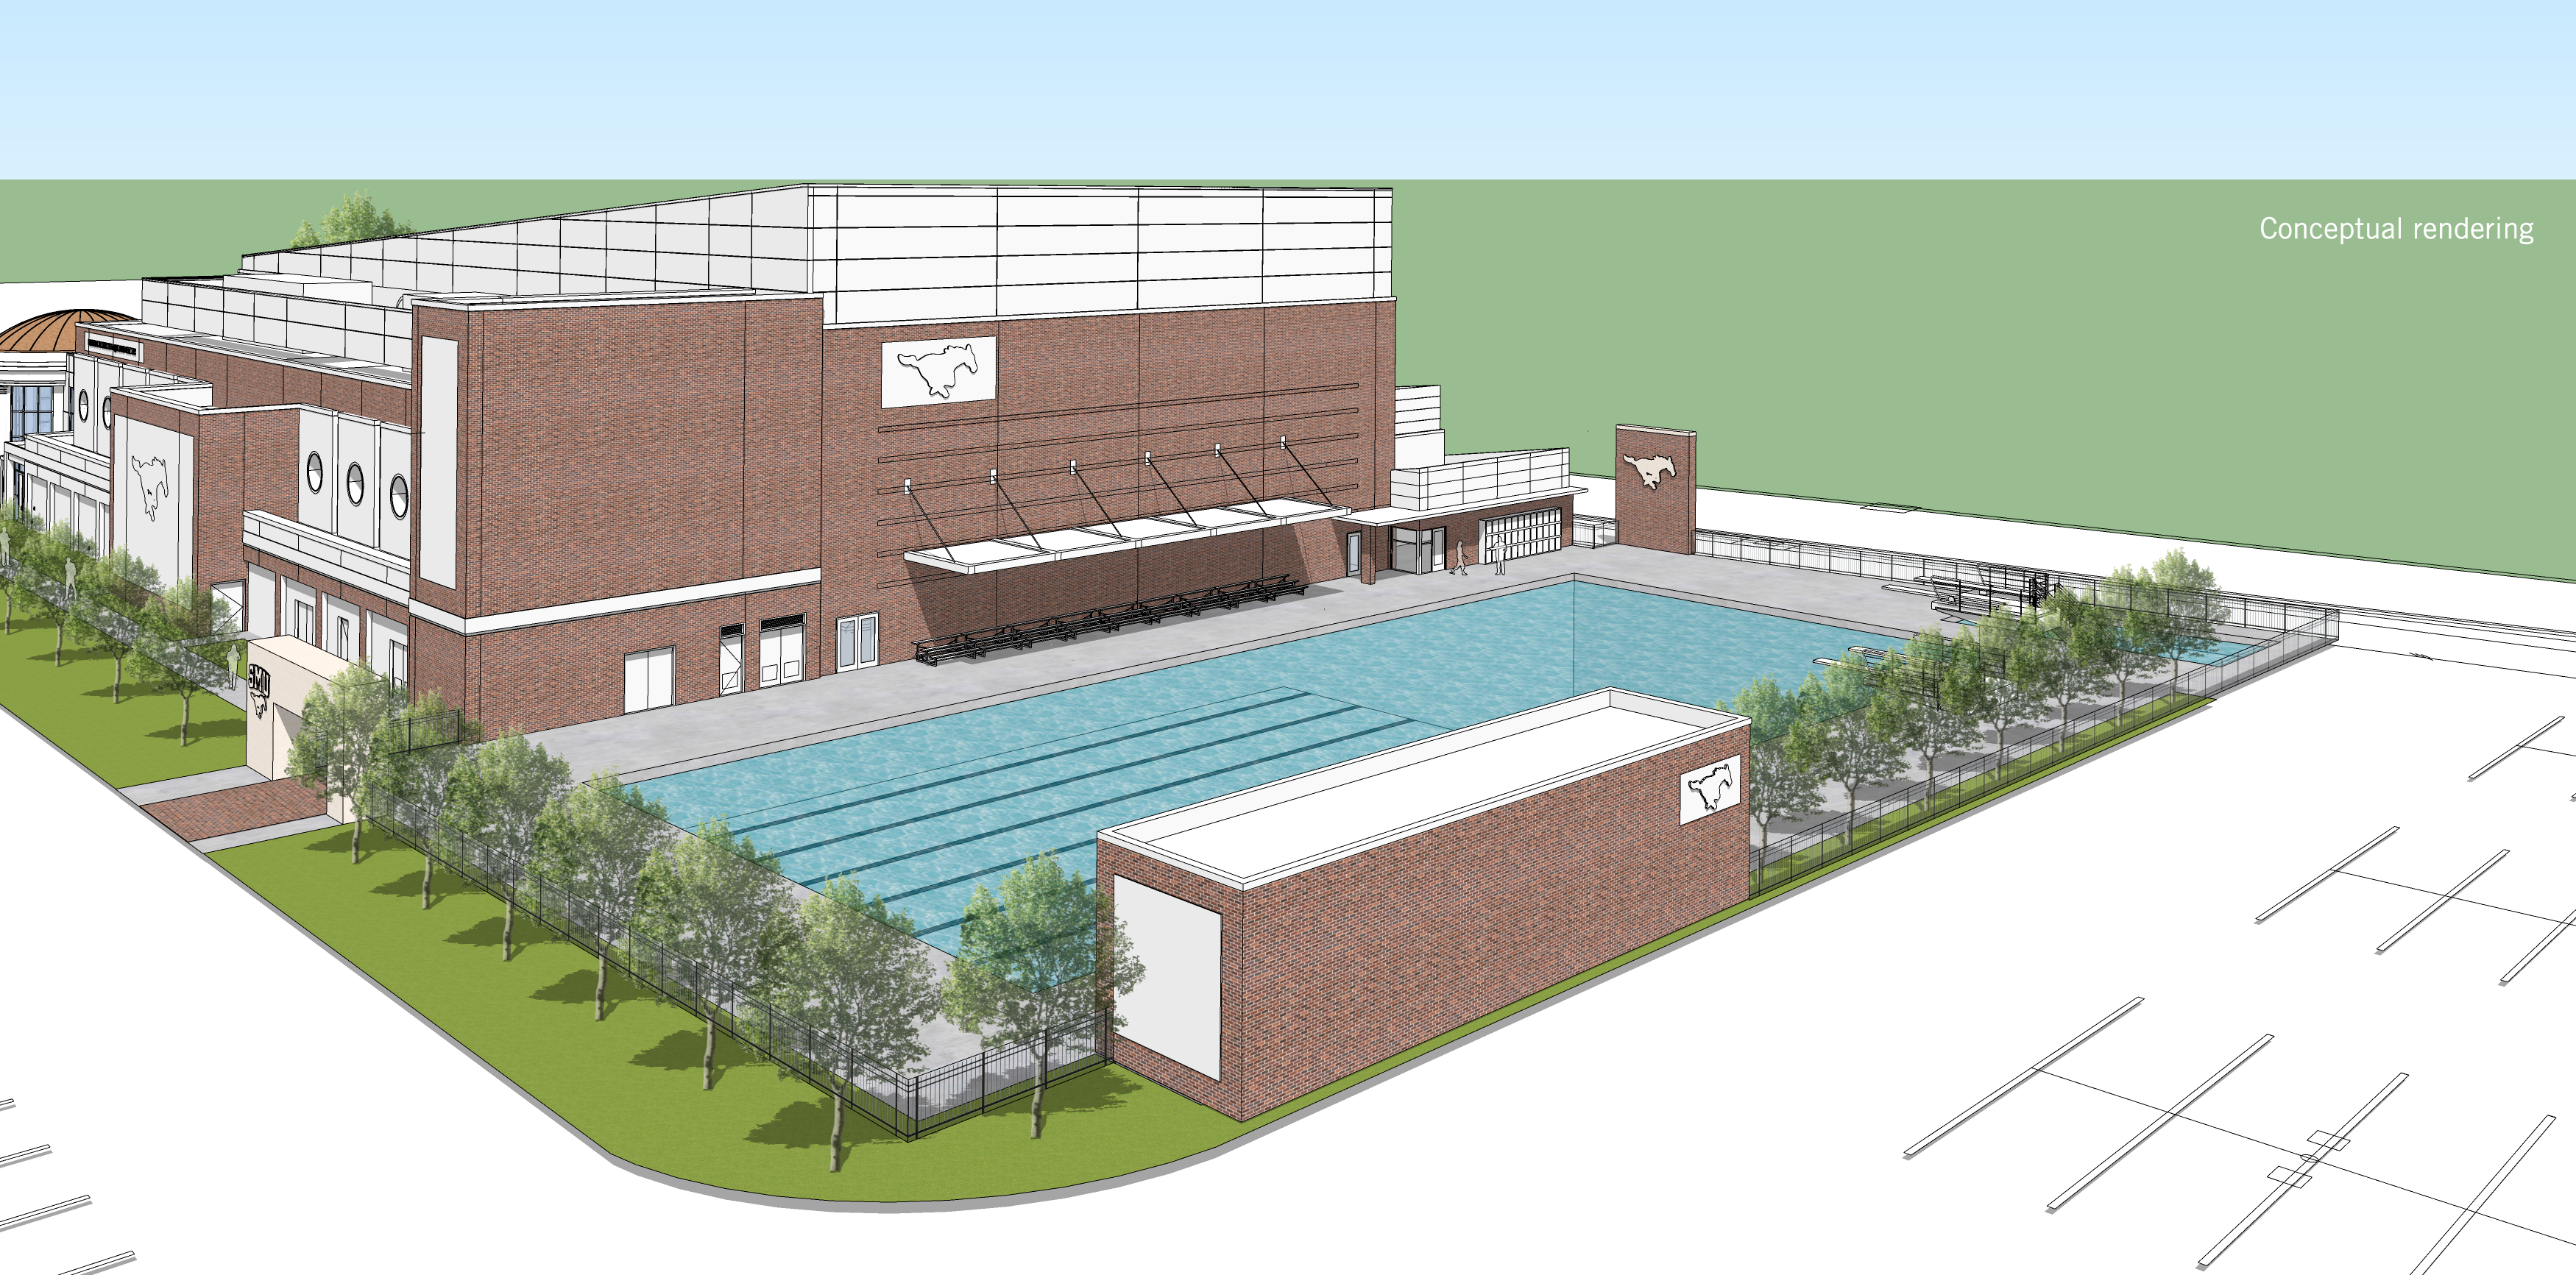 Conceptual rendering of Hickman outdoor pool